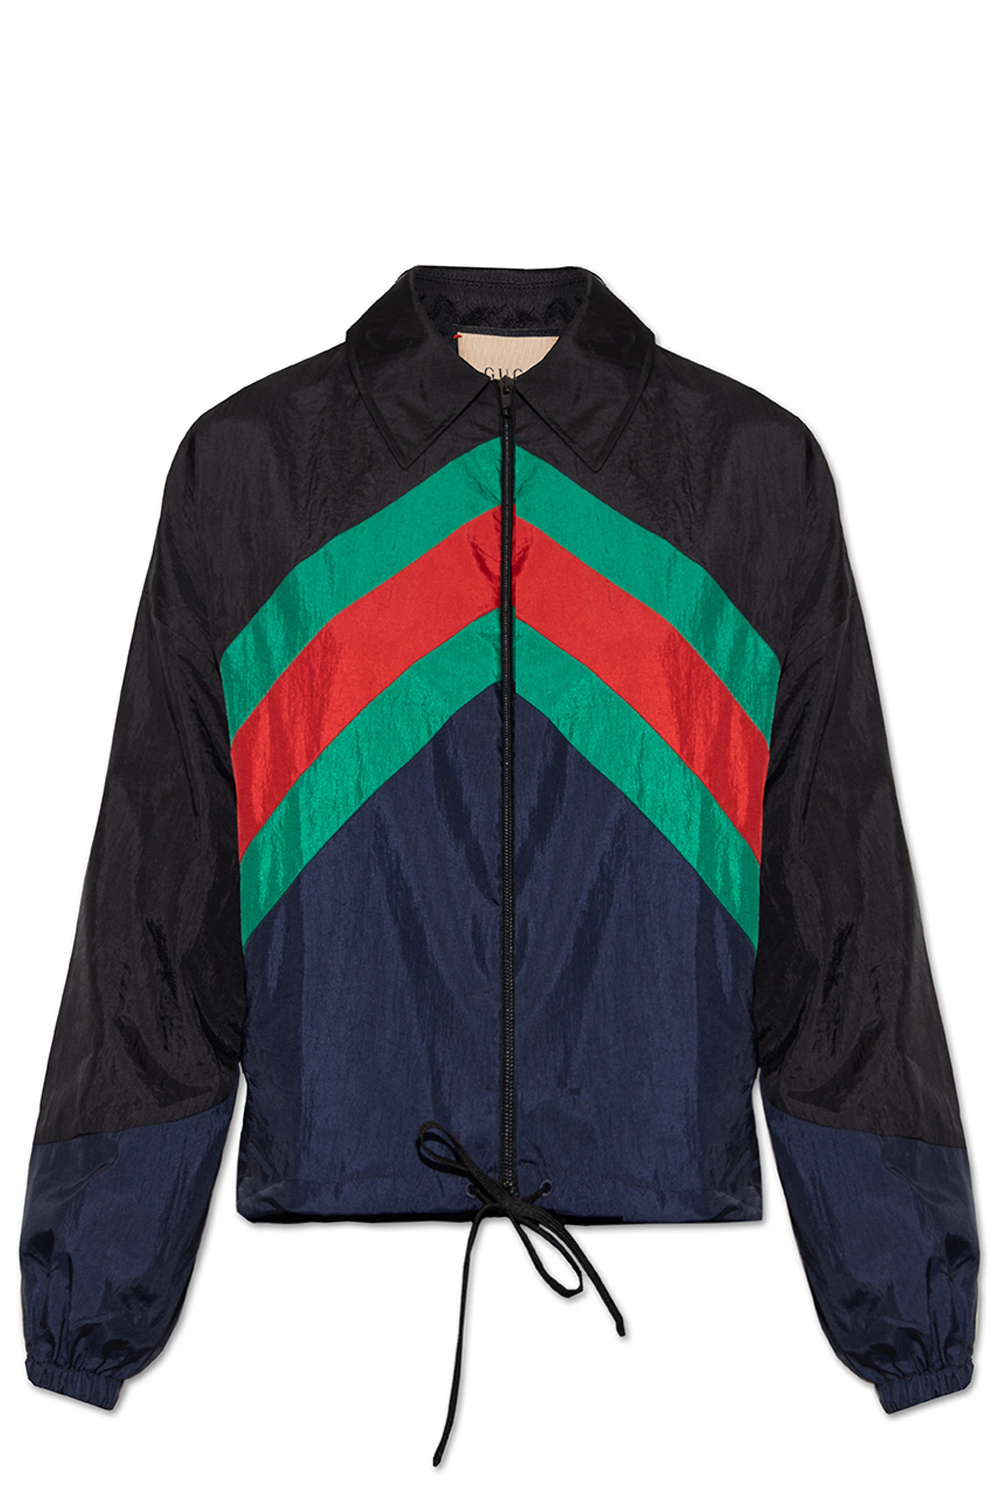 Gucci Nylon jacket